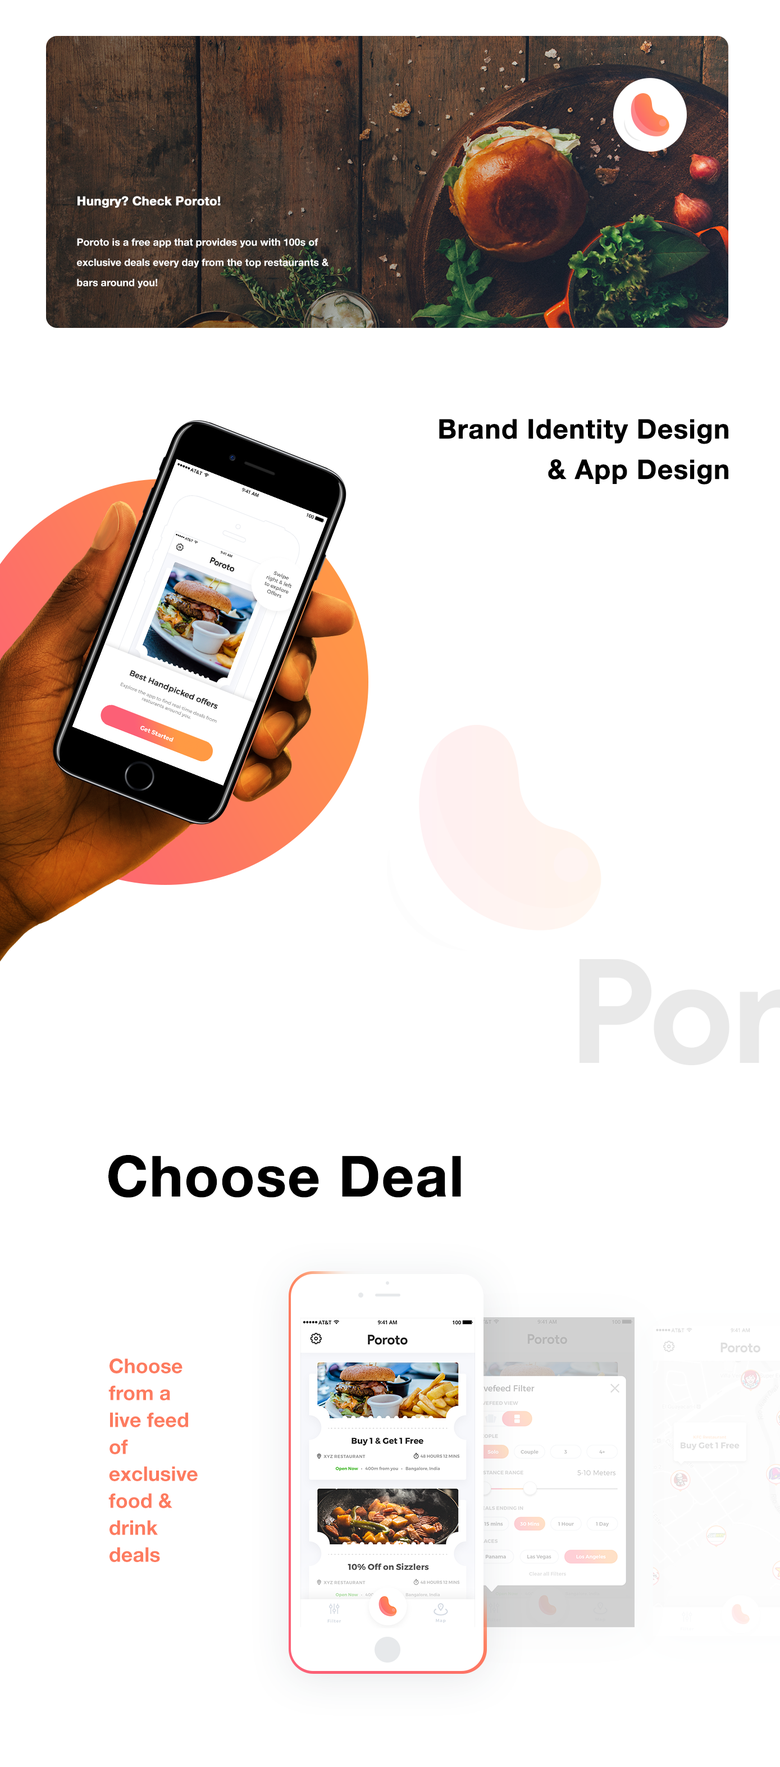 Poroto - Deals Mobile App & Brand Identity